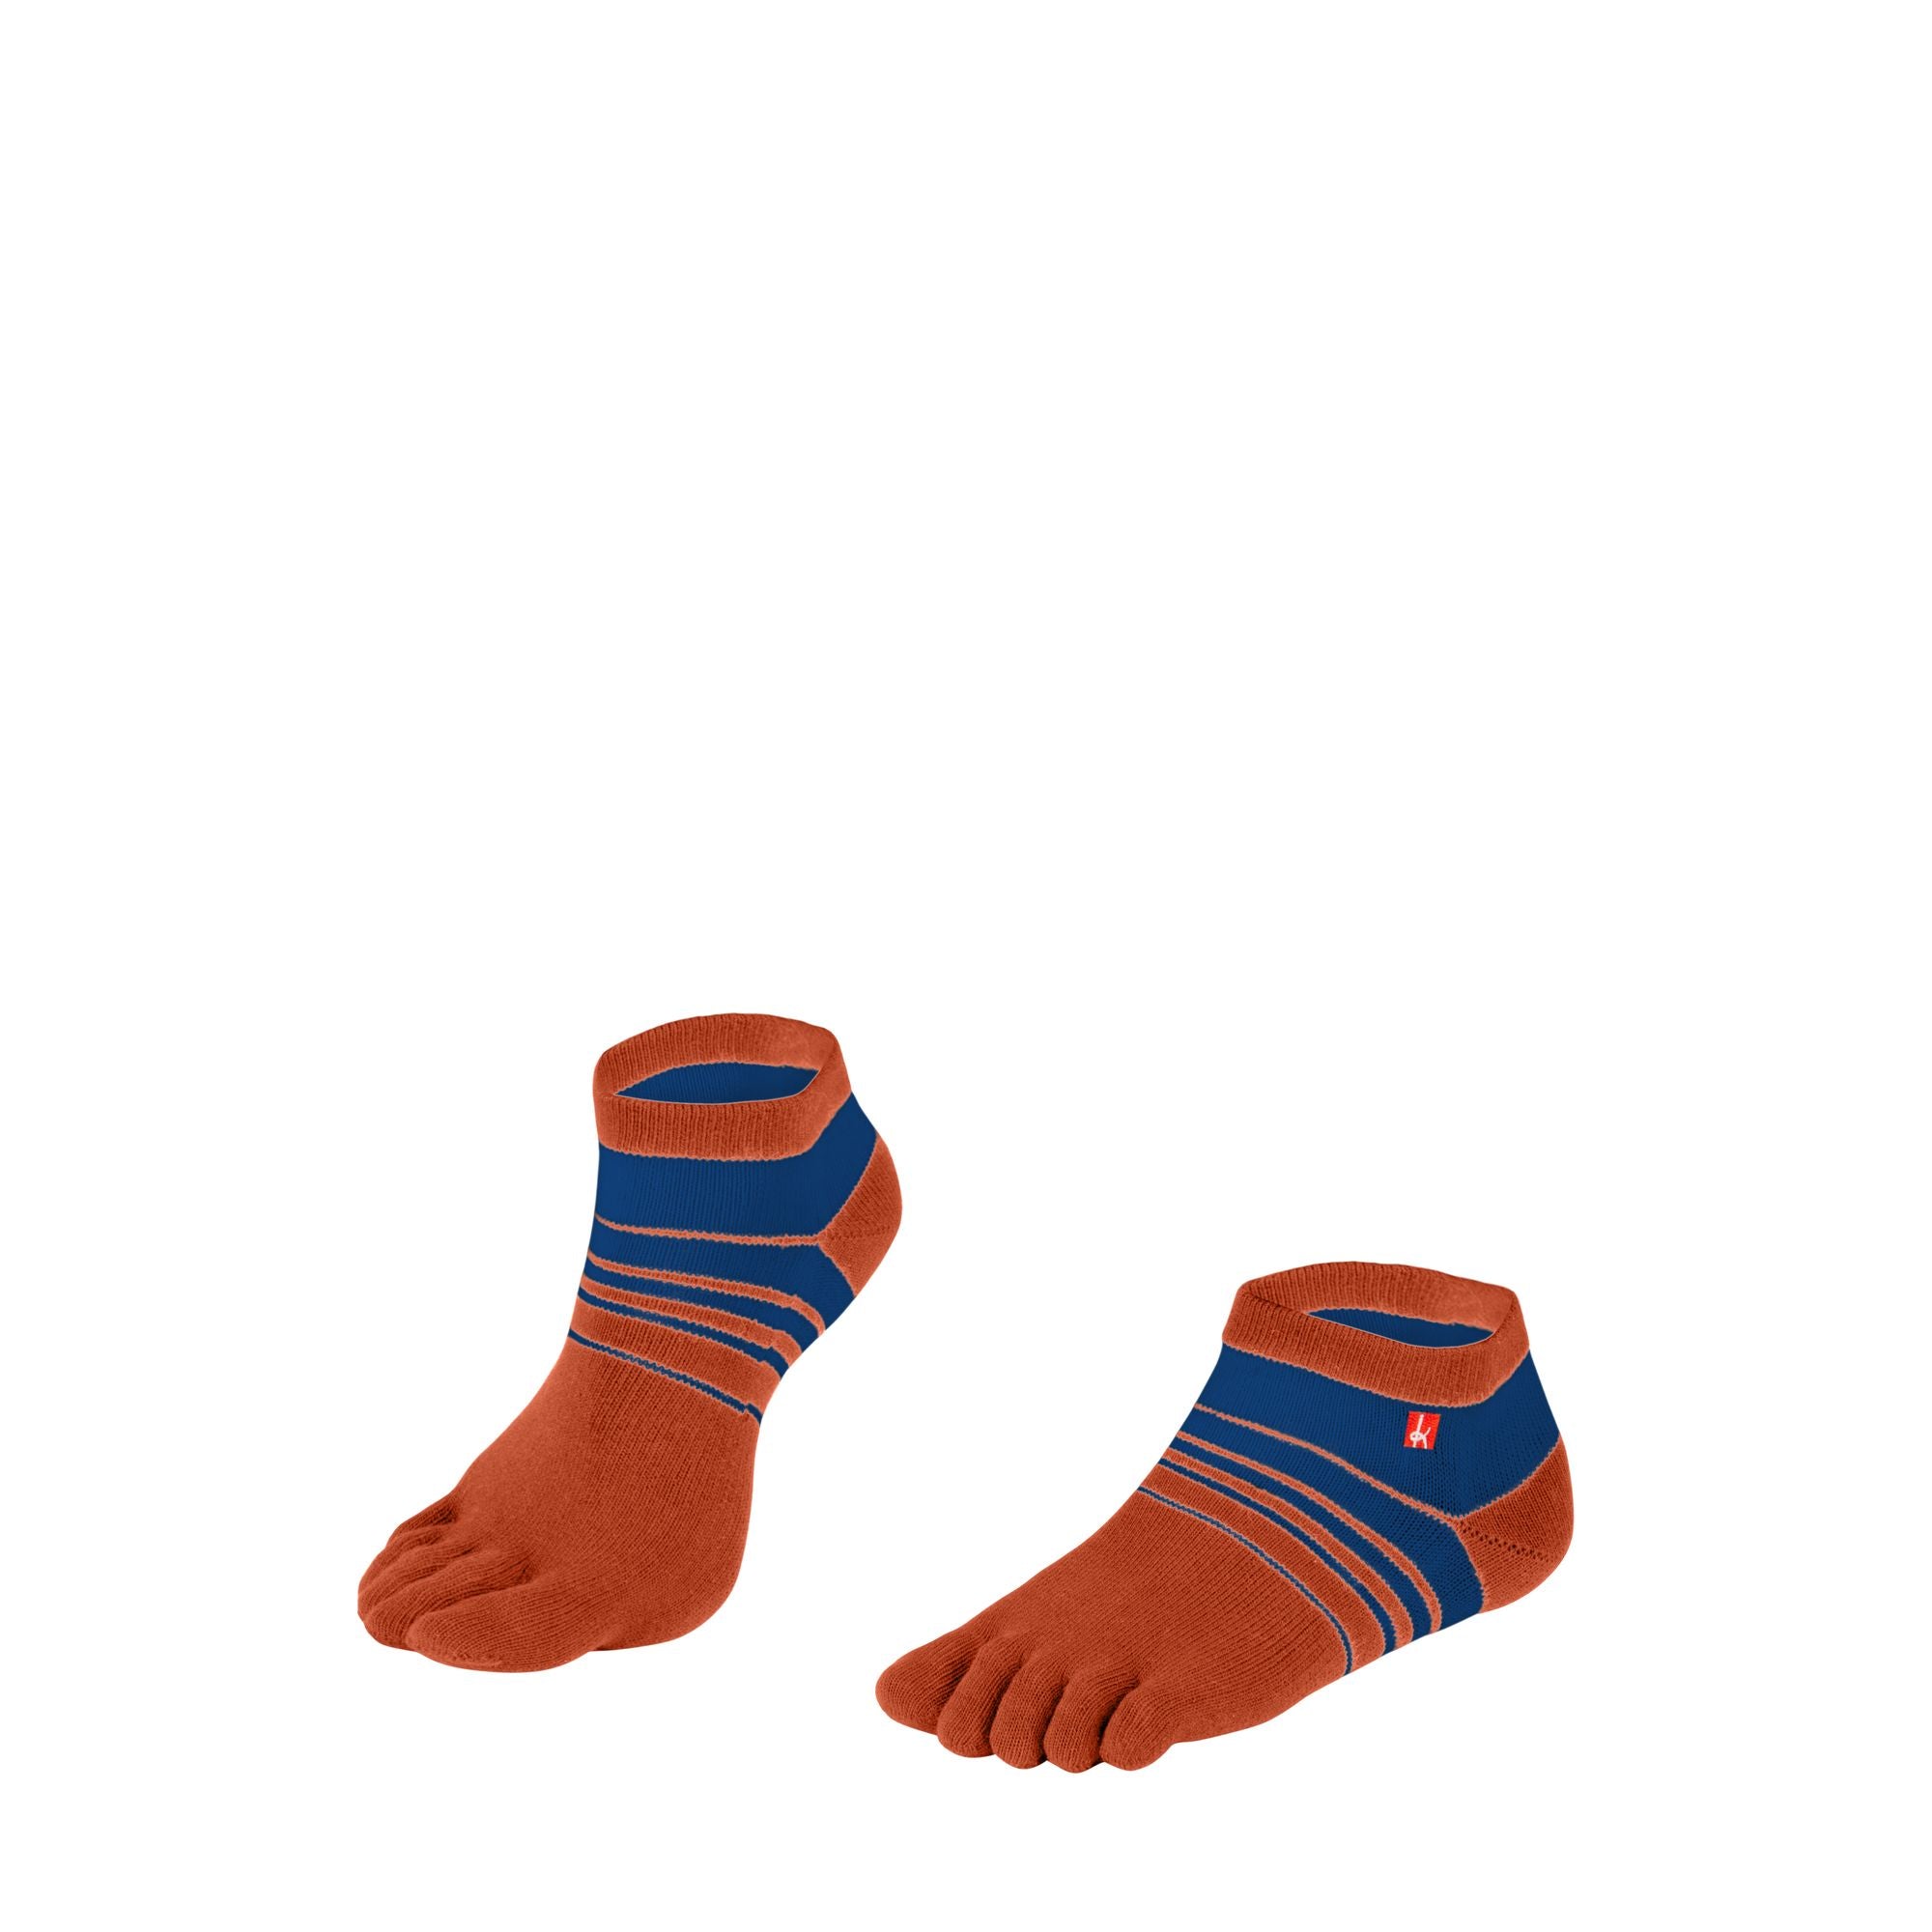 Knitido® Track & Trail Spins, calcetines deportivos con puntera, zapatillas - Knitido